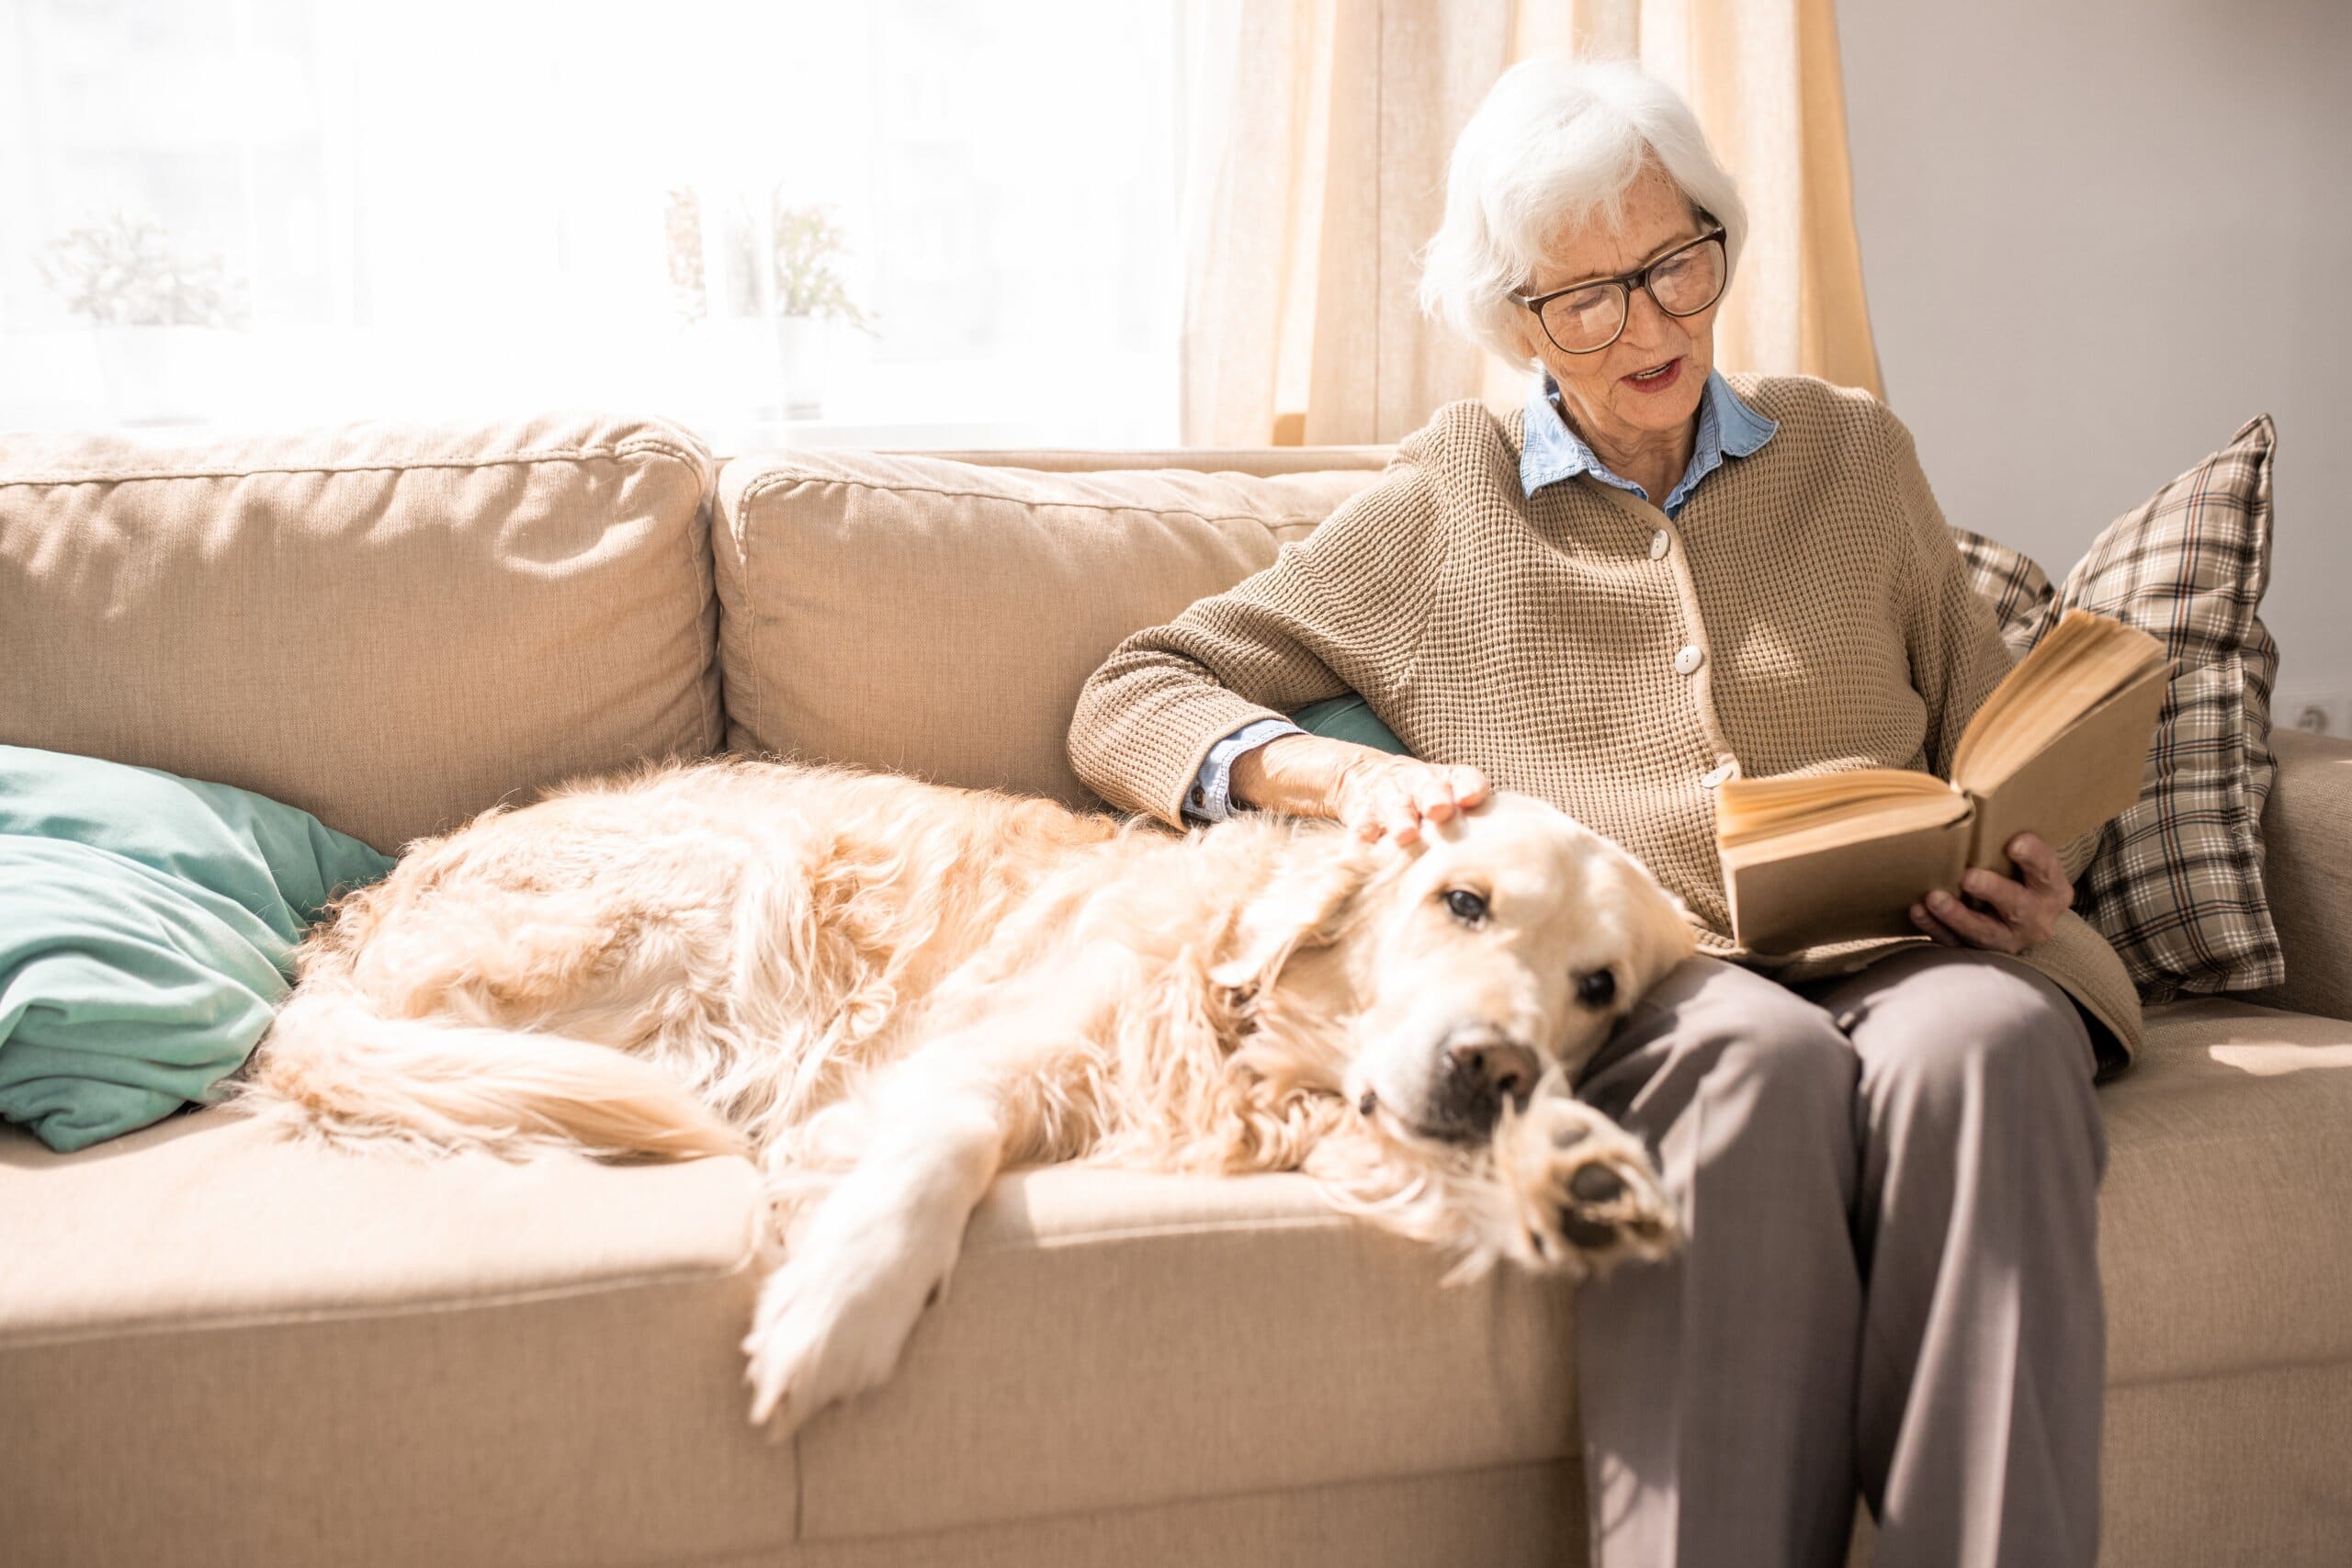 Golden retriever dog asleep on the sofa next to an older lady reading a book.